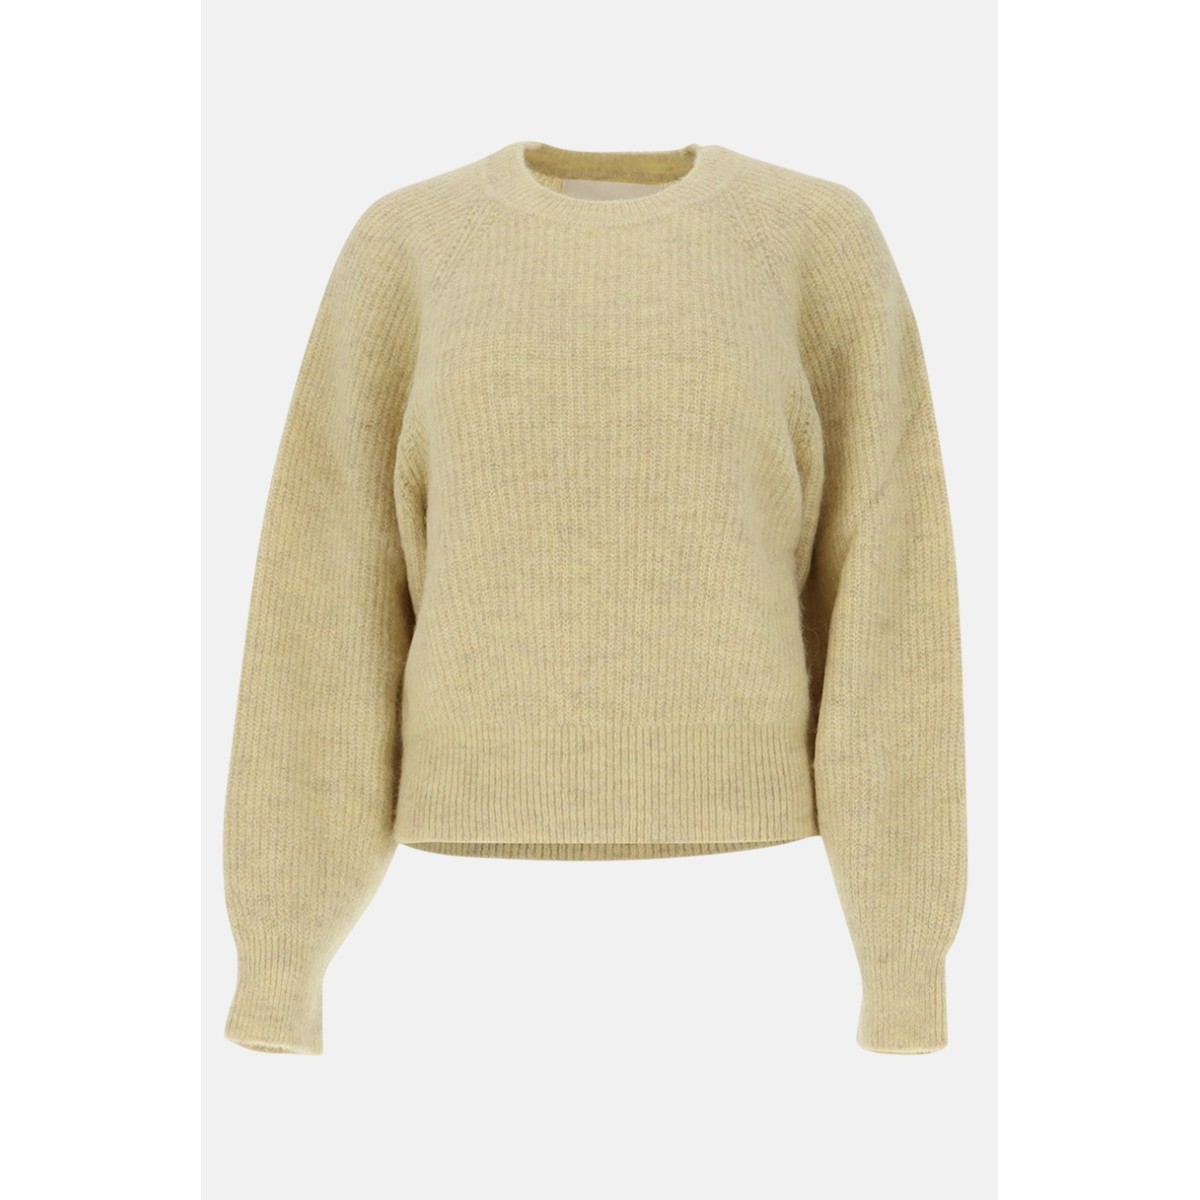 Marant Etoile "Amelia" Sweater